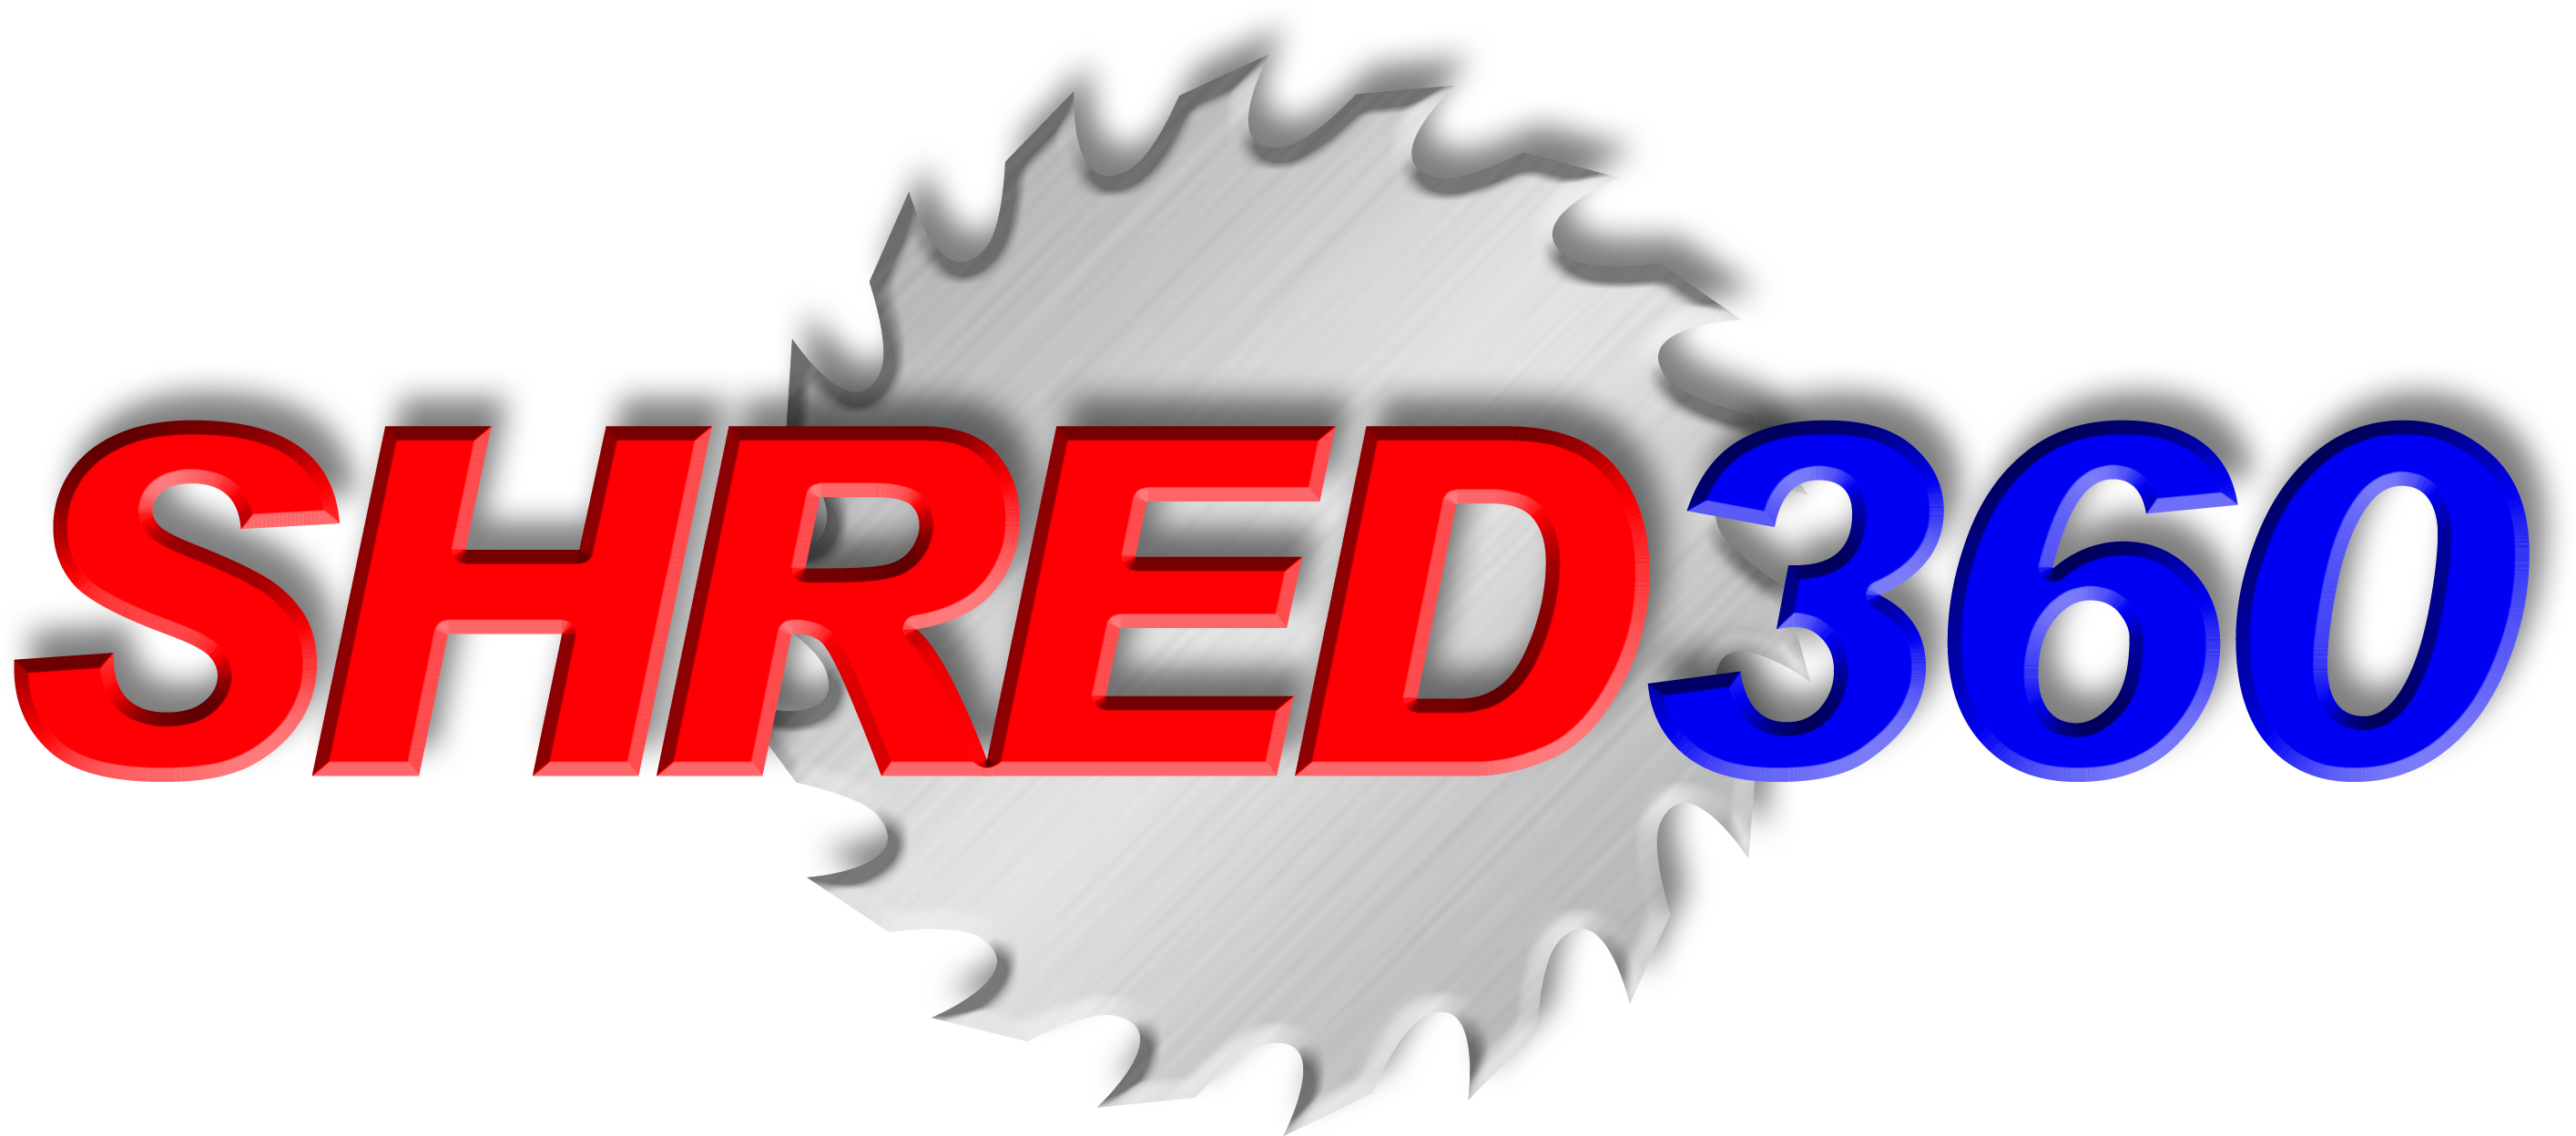 SHRED 360 Logo 1 1